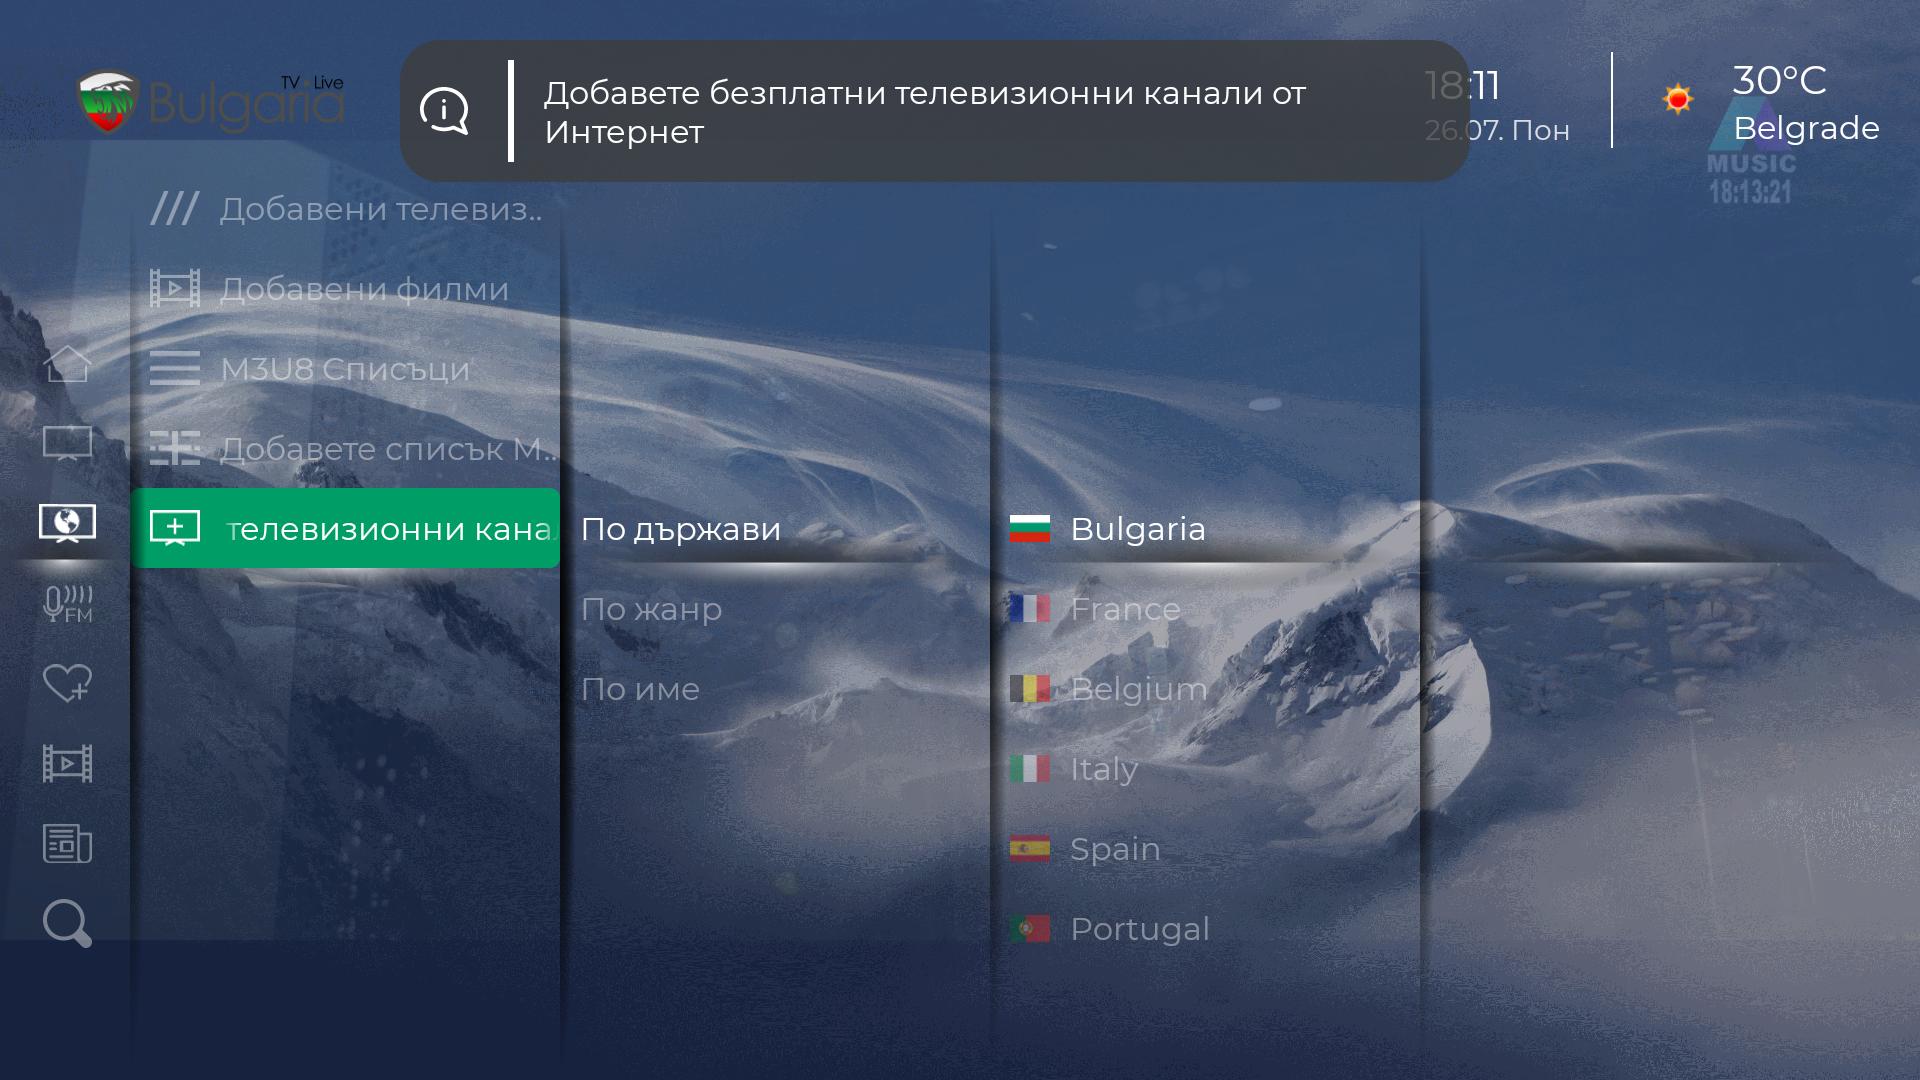 Bulgaria Live 1.2.04 Screenshot 22